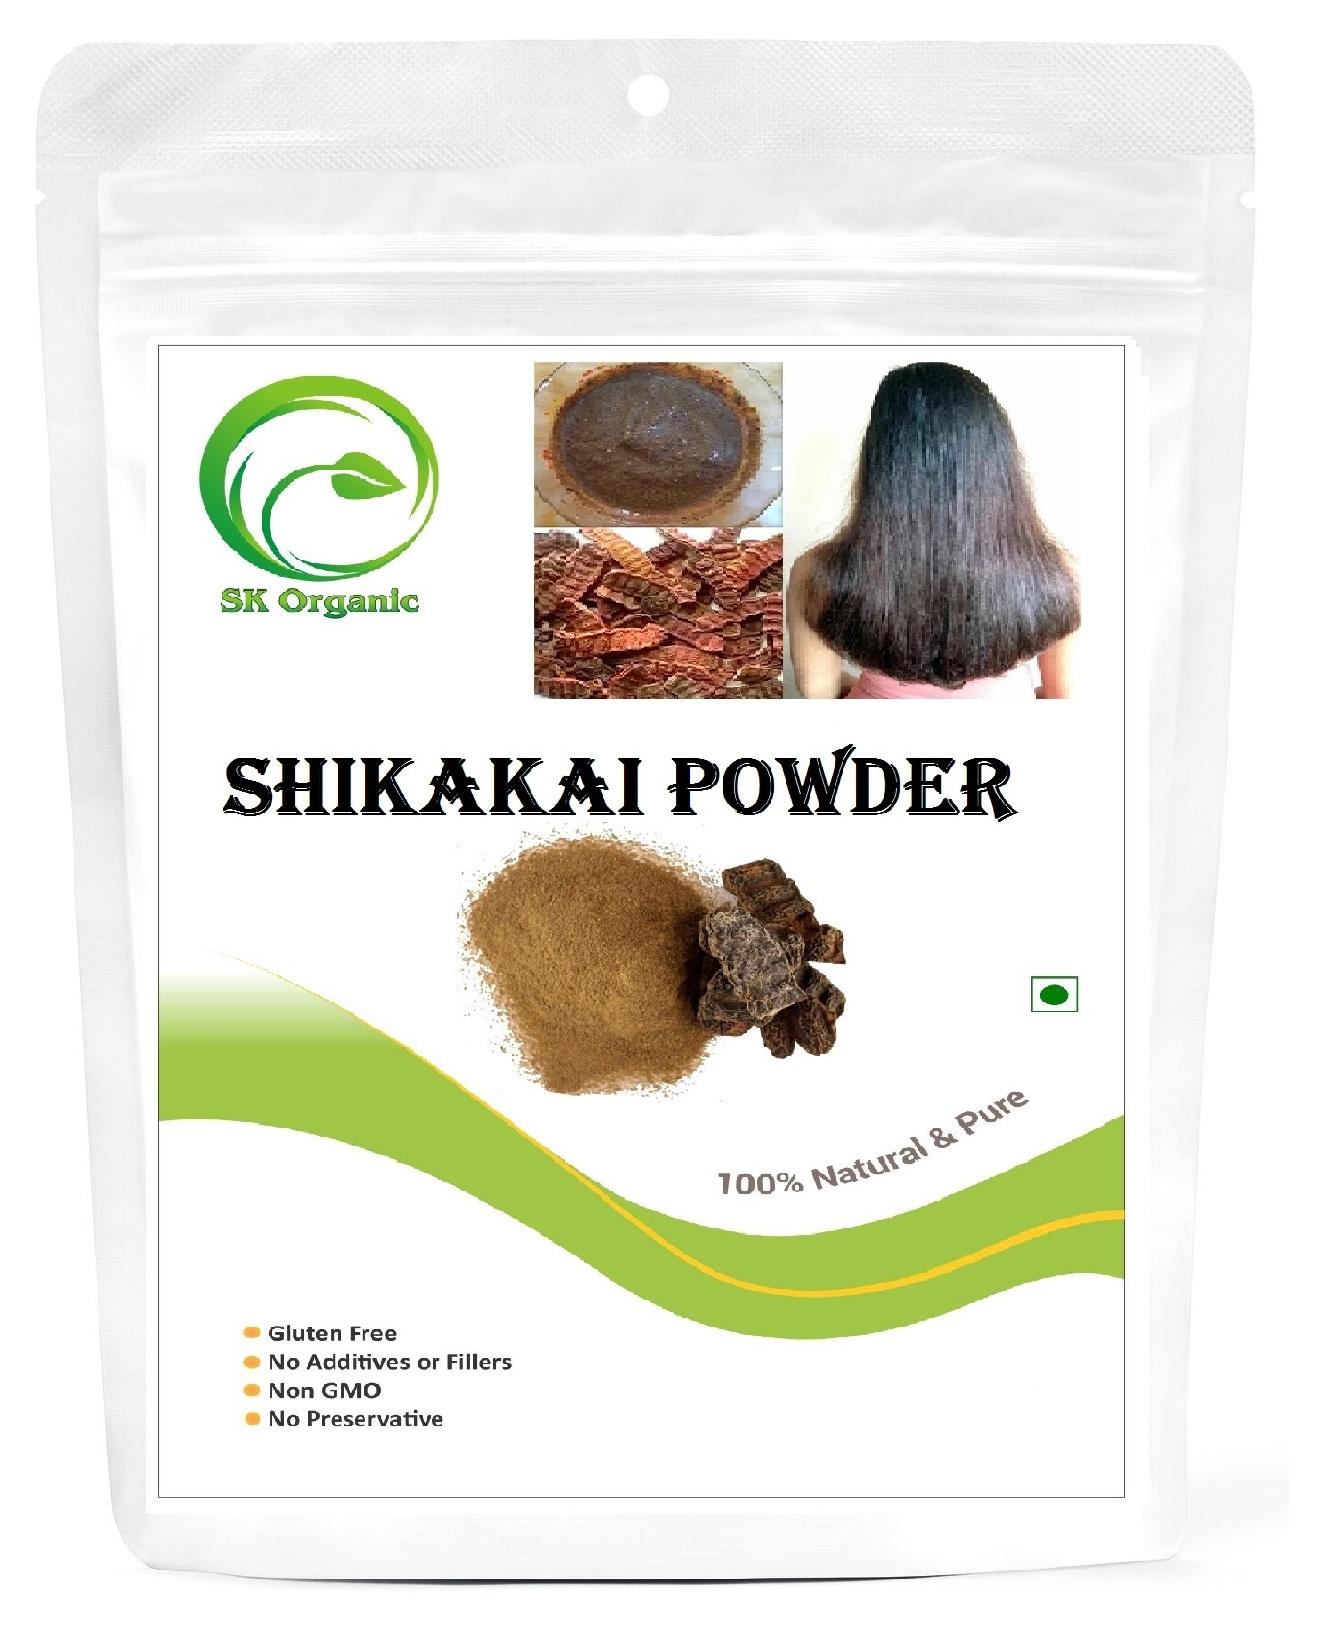 SK ORGANIC Shikakai Powder for healthy hair care thumbnail